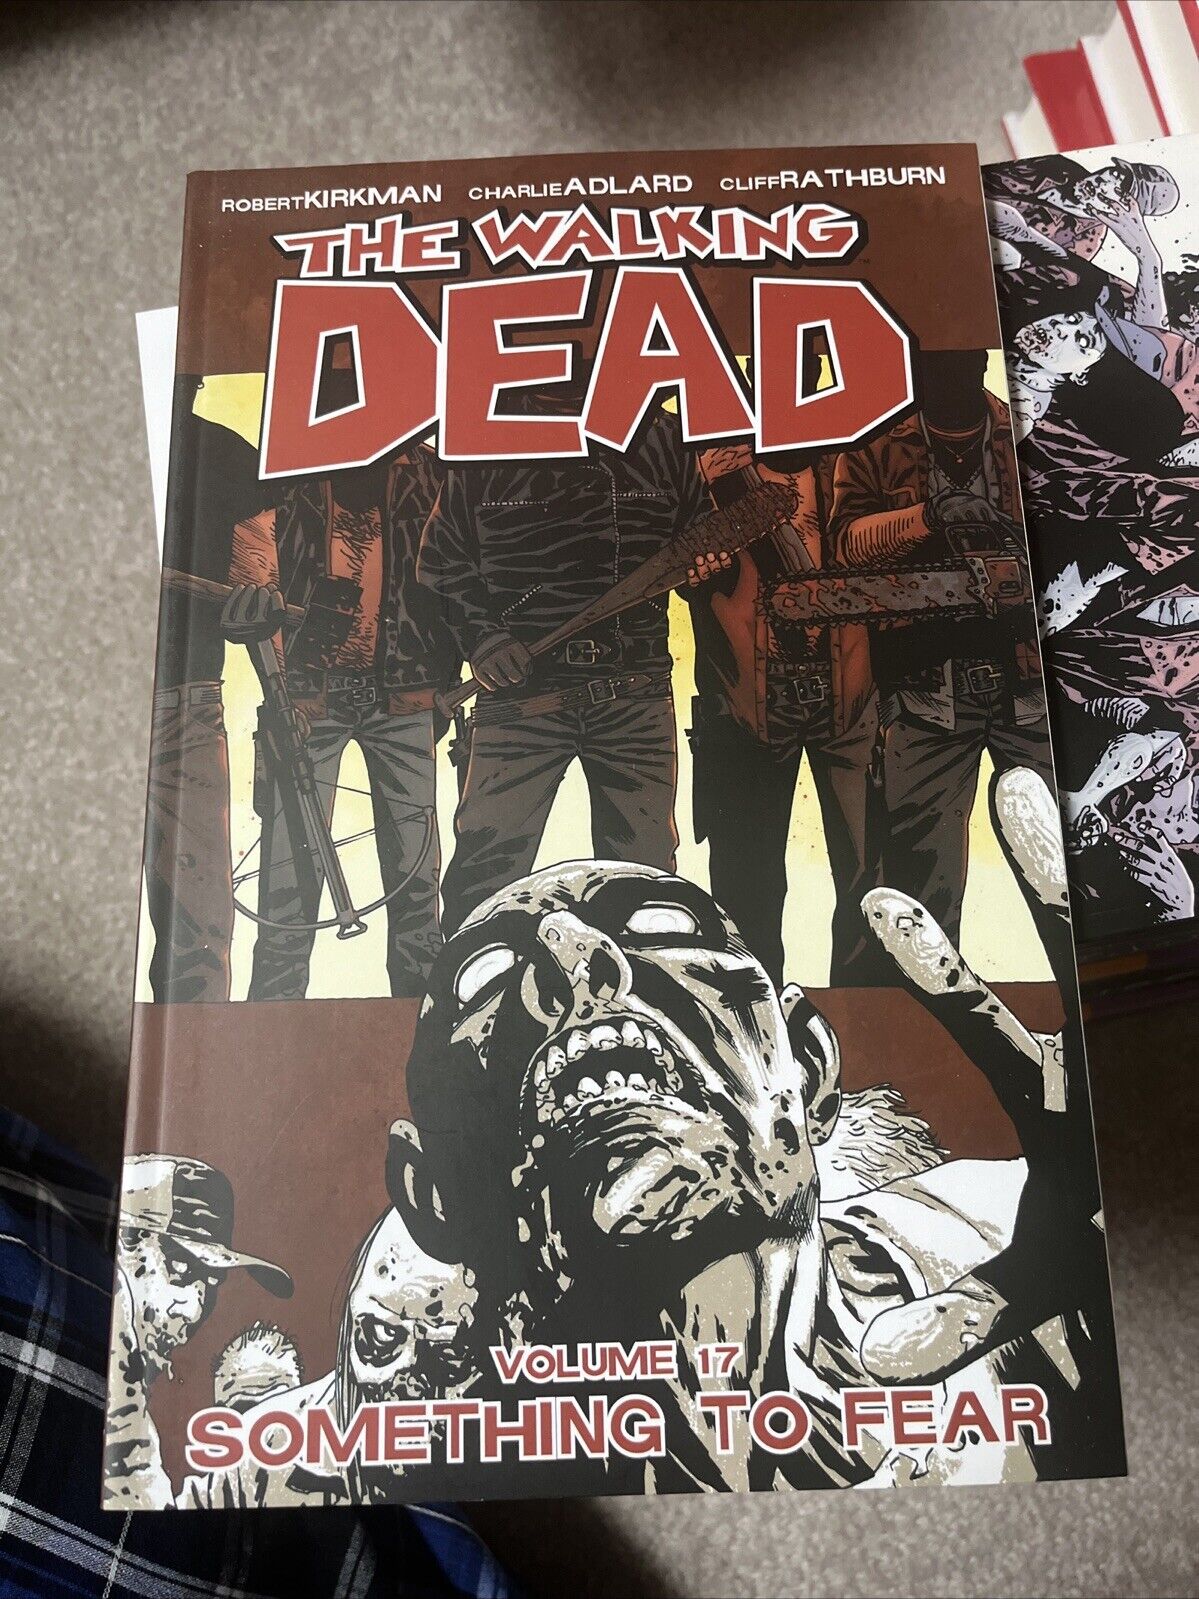 The Walking Dead #17 (Image Comics Malibu Comics November 2012)